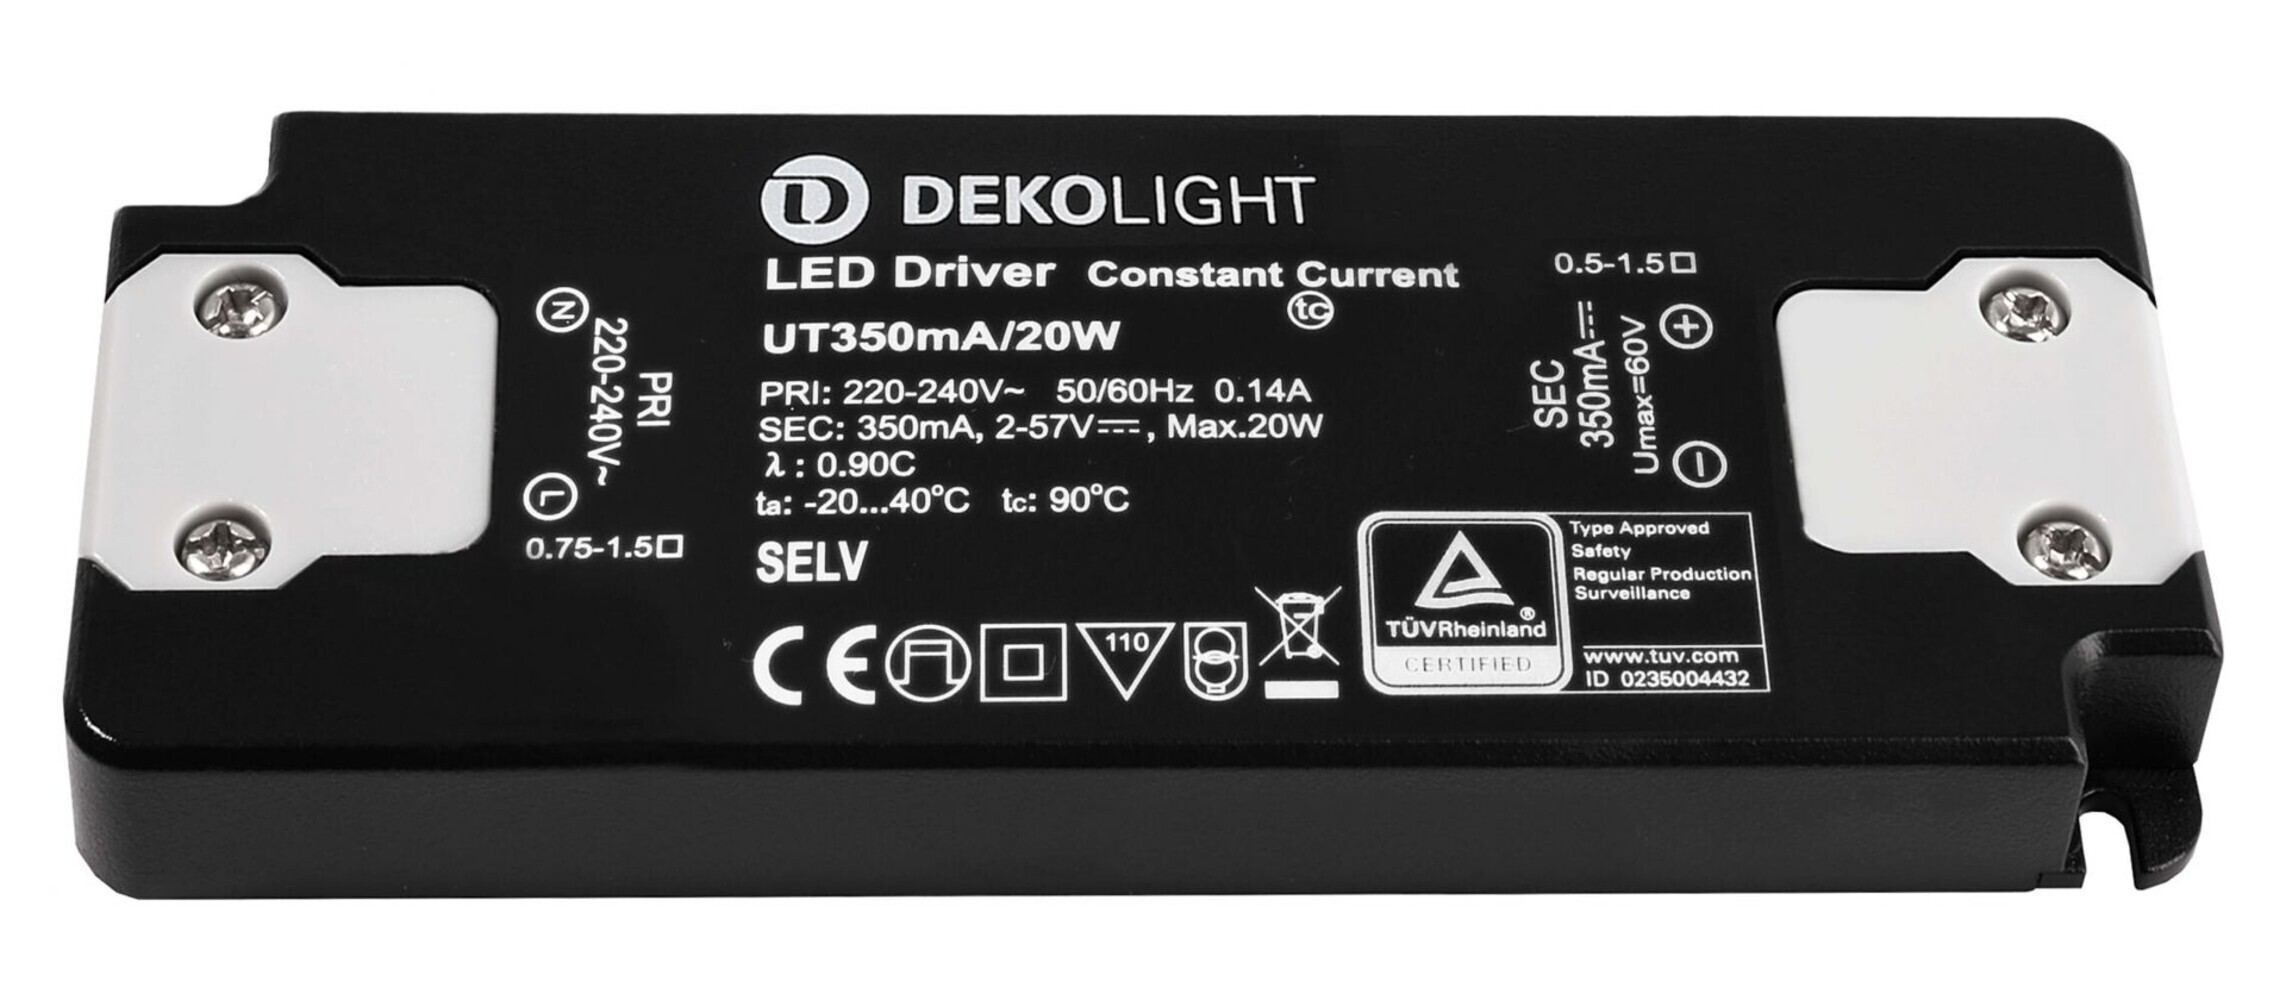 Hochqualitatives stromkonstantes LED-Netzgerät von Deko-Light